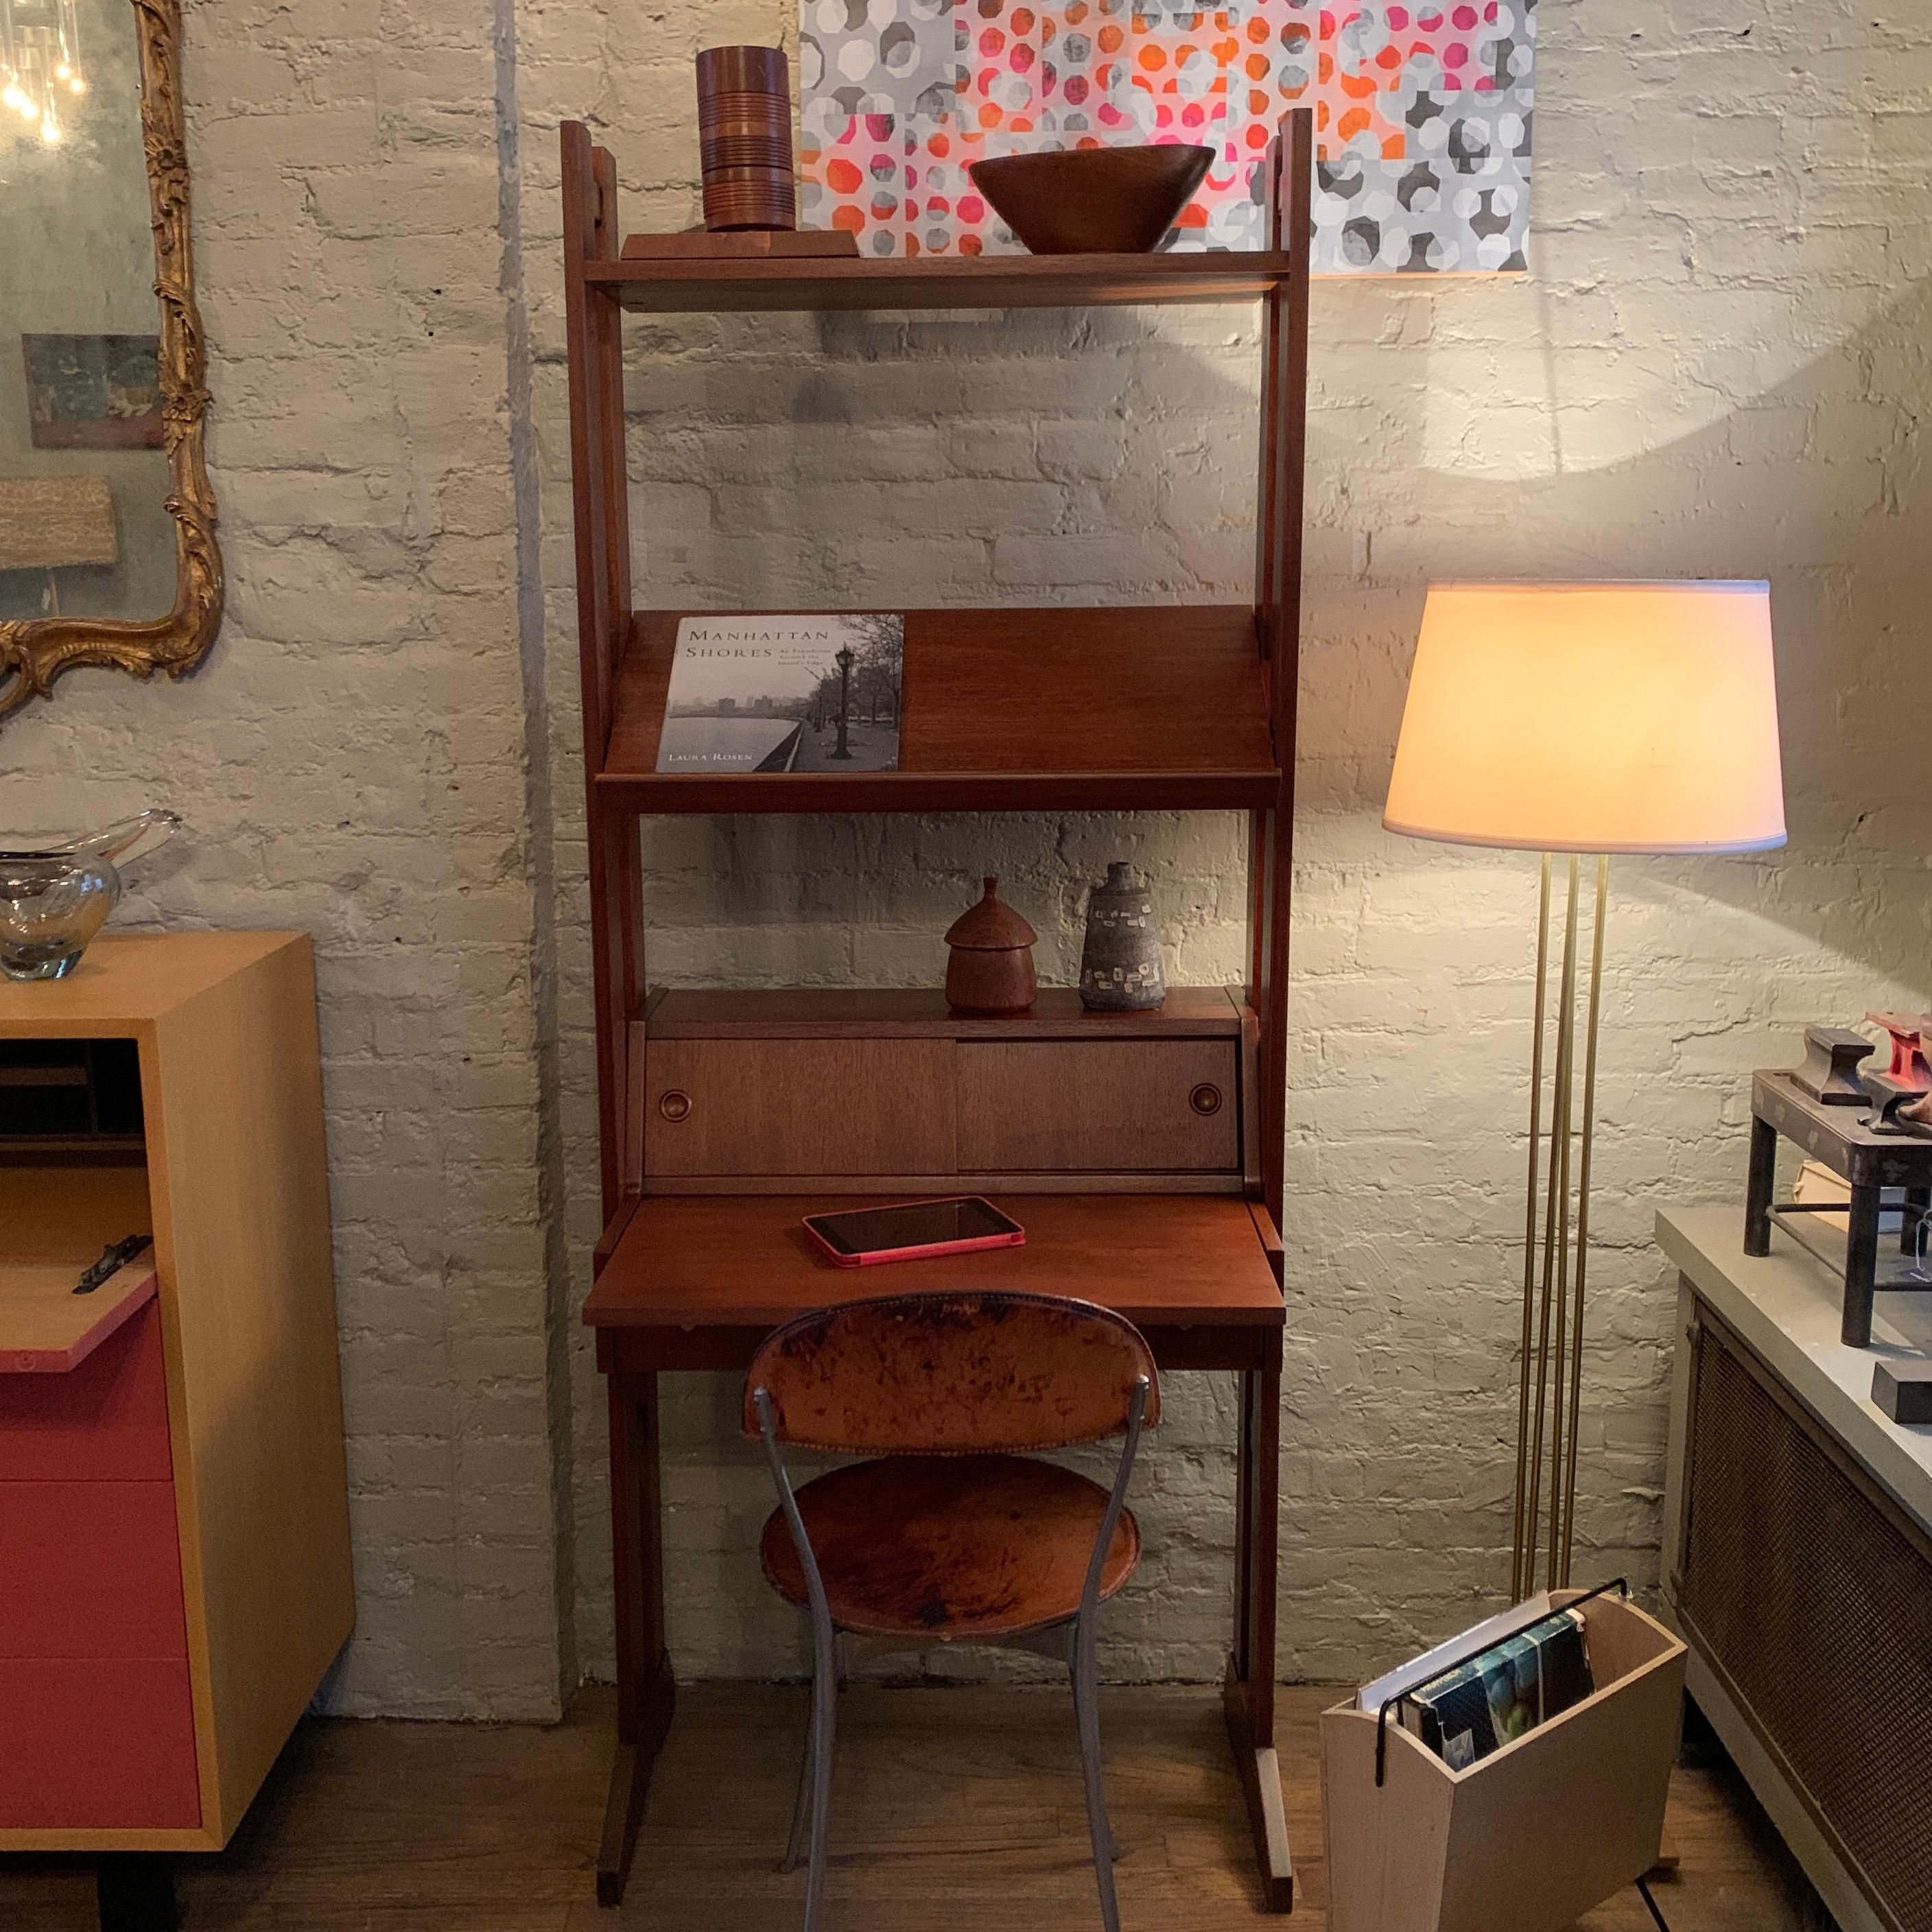 20th Century Mid-Century Modern Shelf Unit Pull-Out Desk